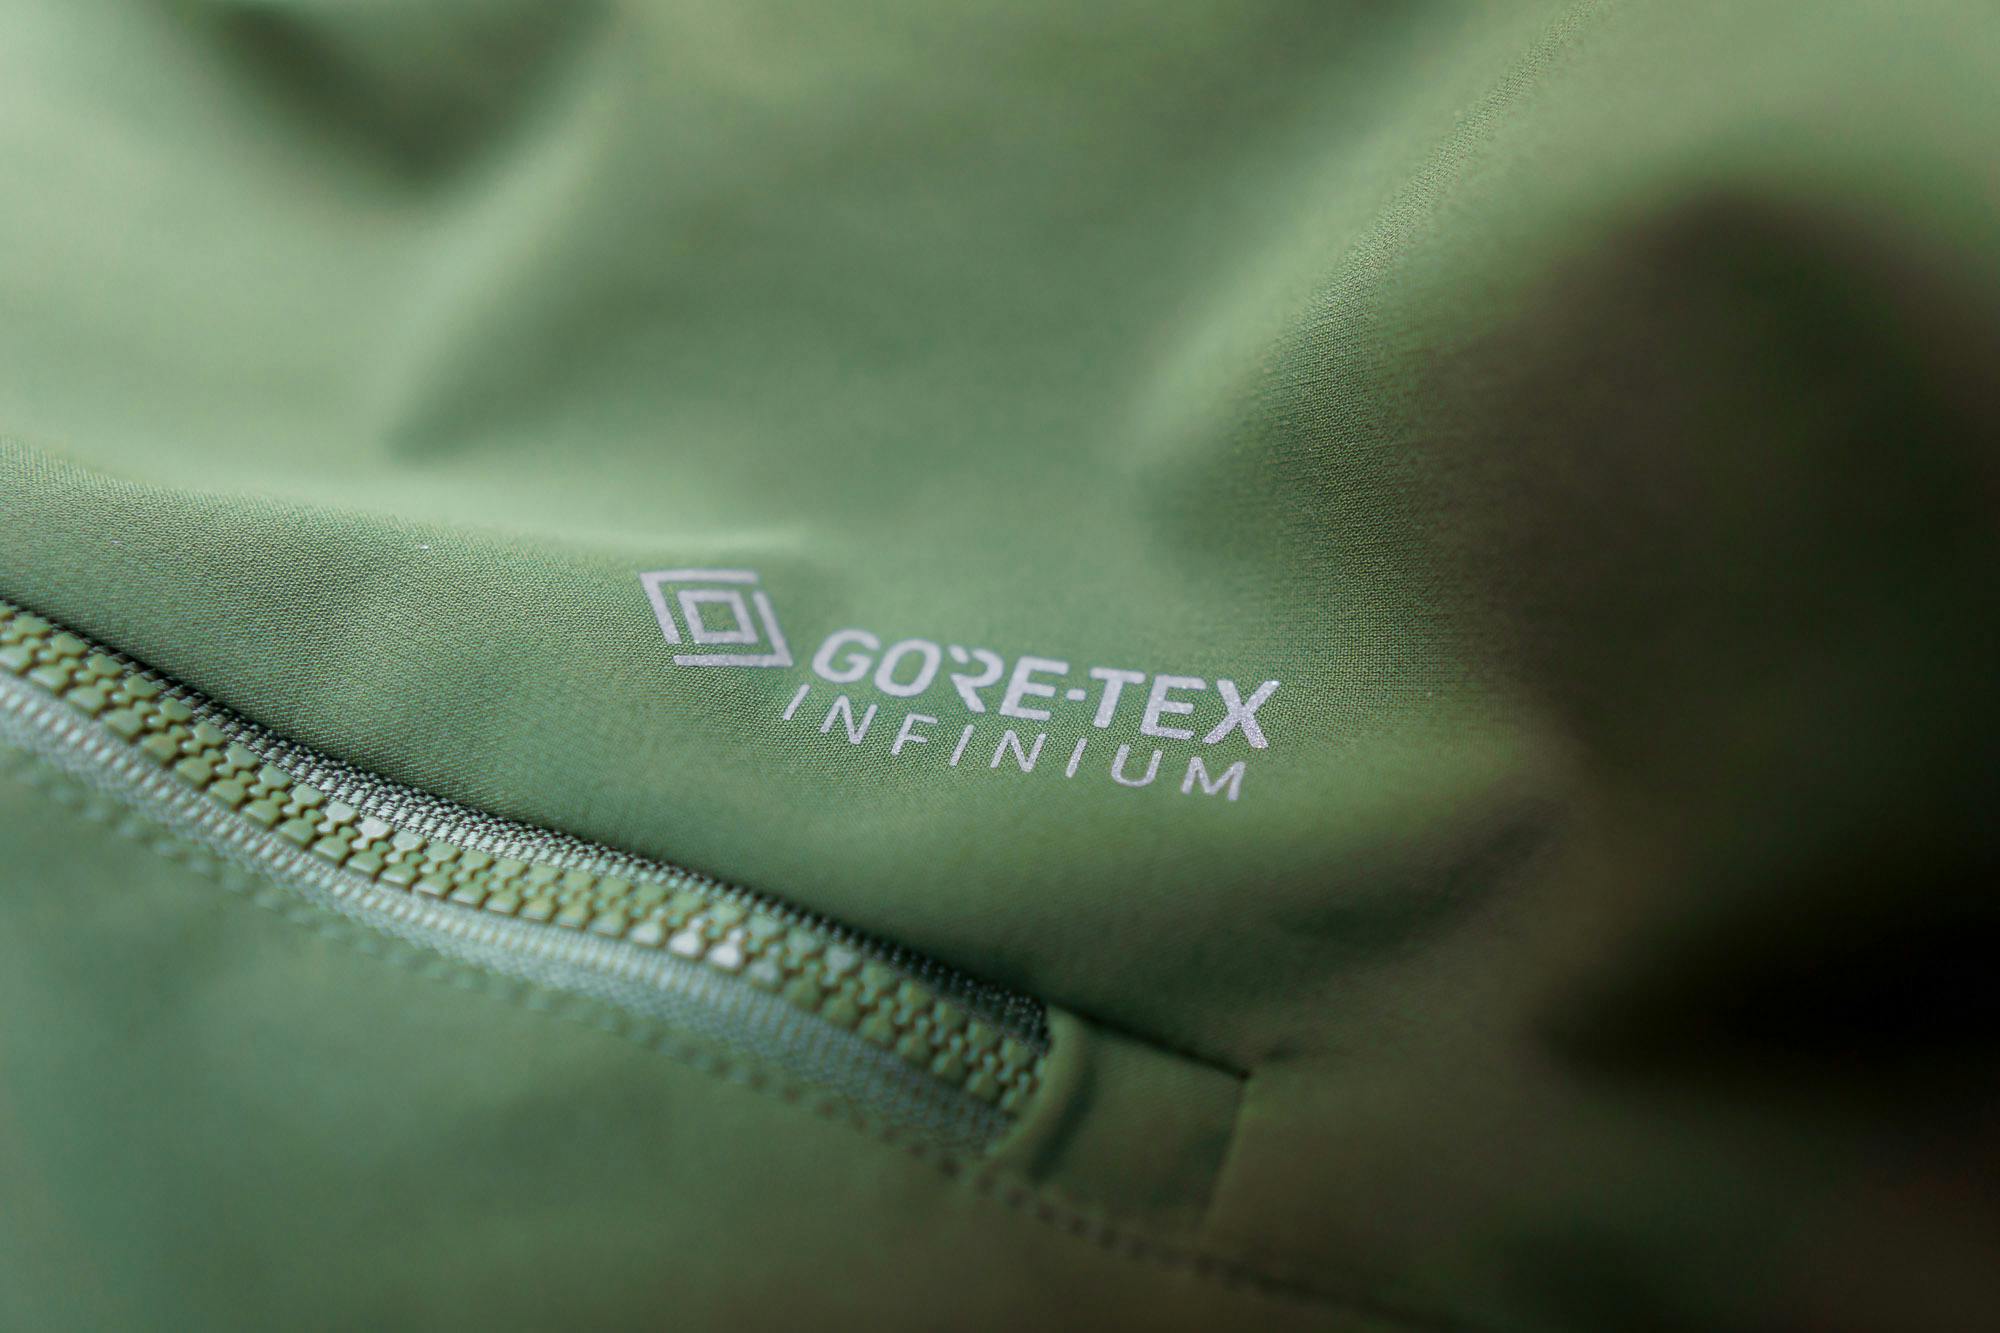 goretex logo